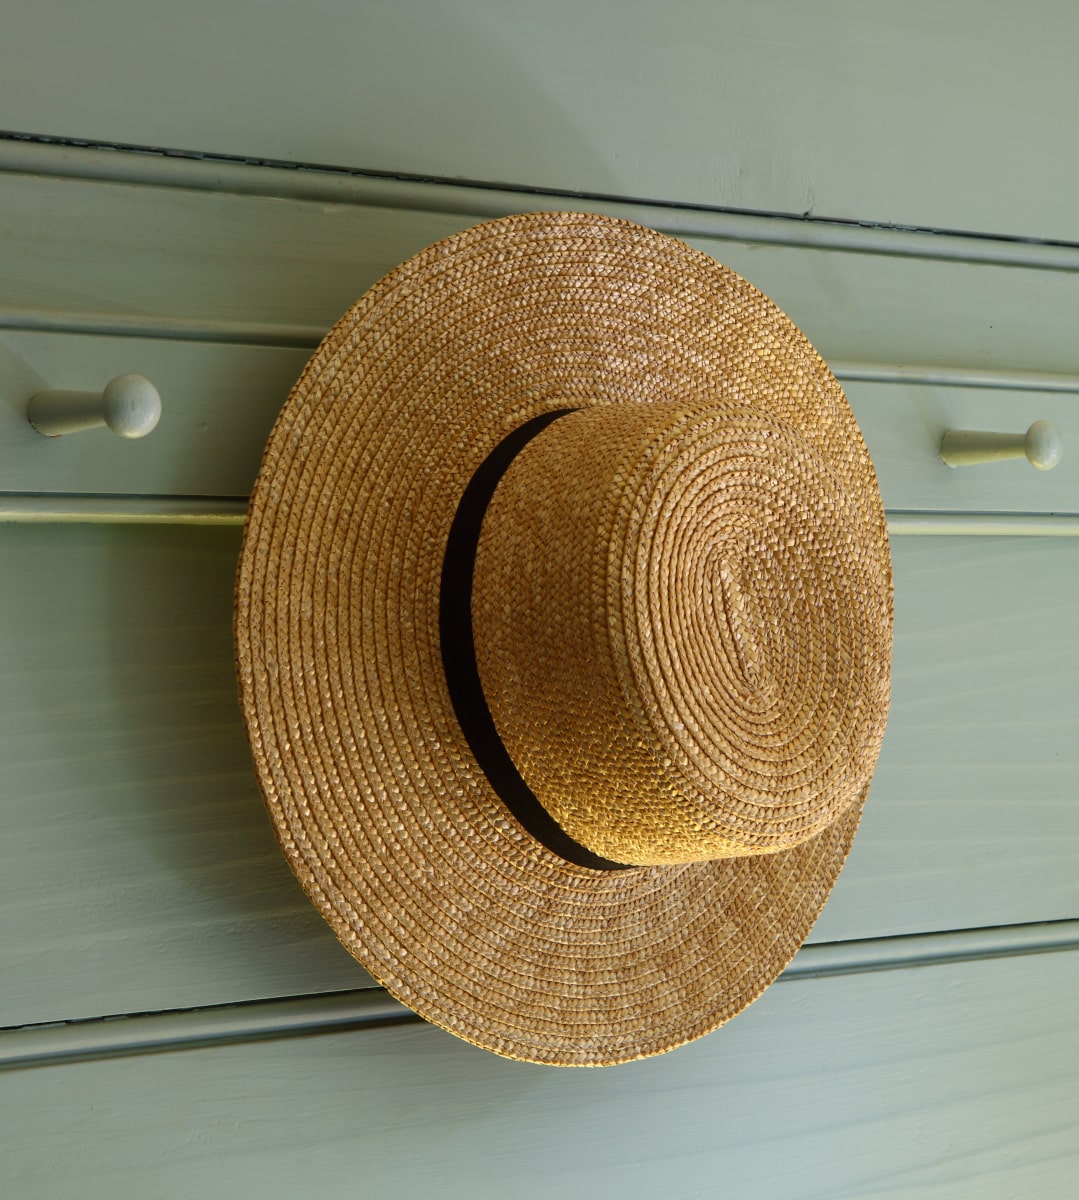 Amish straw hat hanging on wooden peg rail